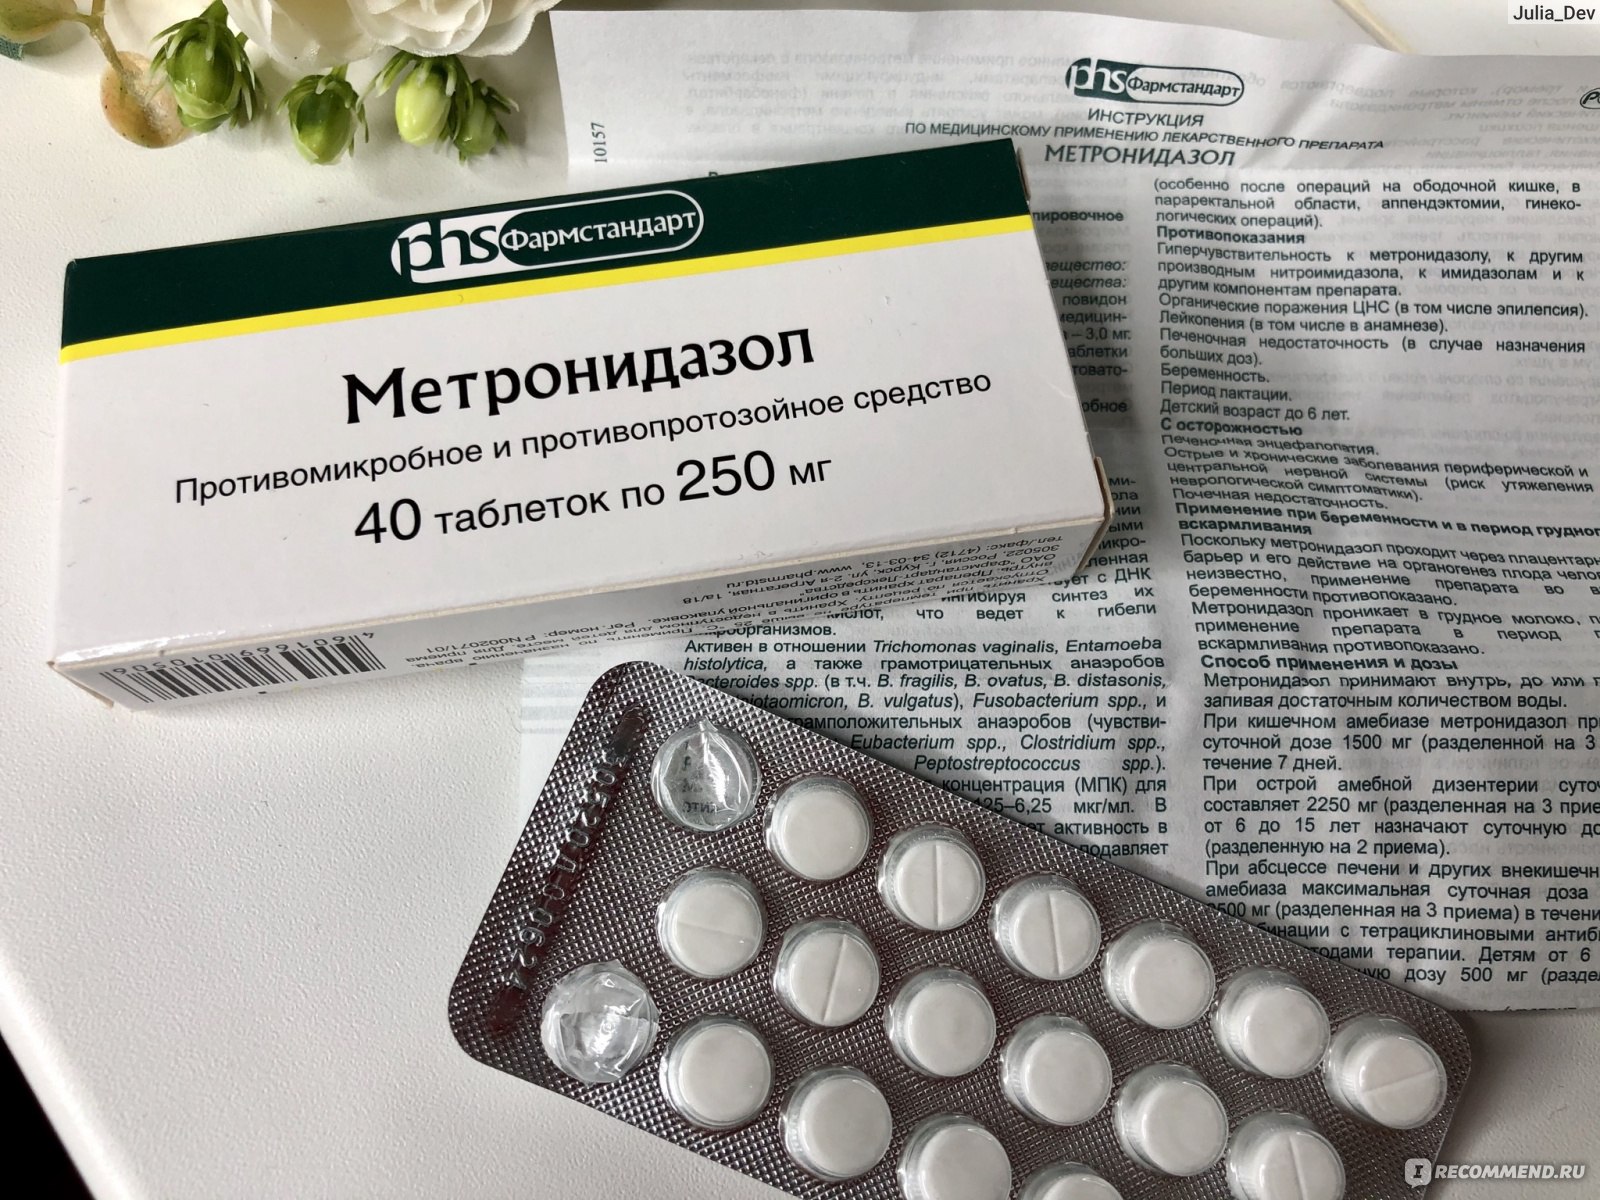 Метронидазол таблетки для мужчин. Метронидазол таблетки 500 мг. Противомикробные таблетки метронидазол. Метронидазол 0.25 таблетки. Метронидазол таблетки 250 мг 40 шт. Фармстандарт.